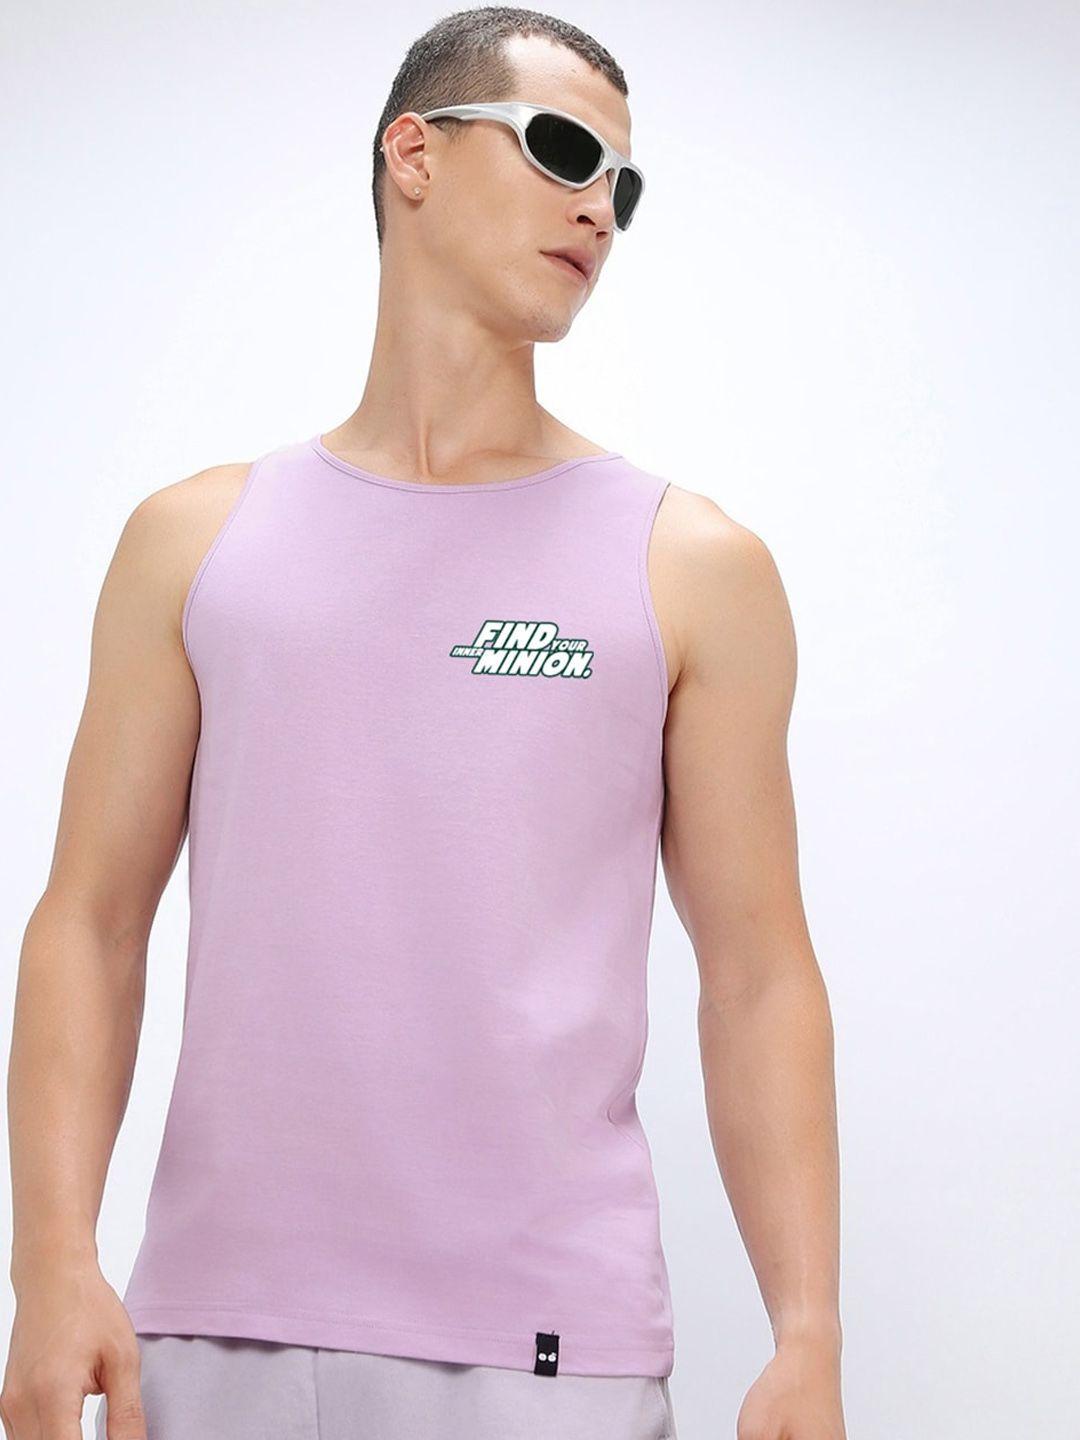 bewakoof x official minions merchandise graphic printed cotton vest